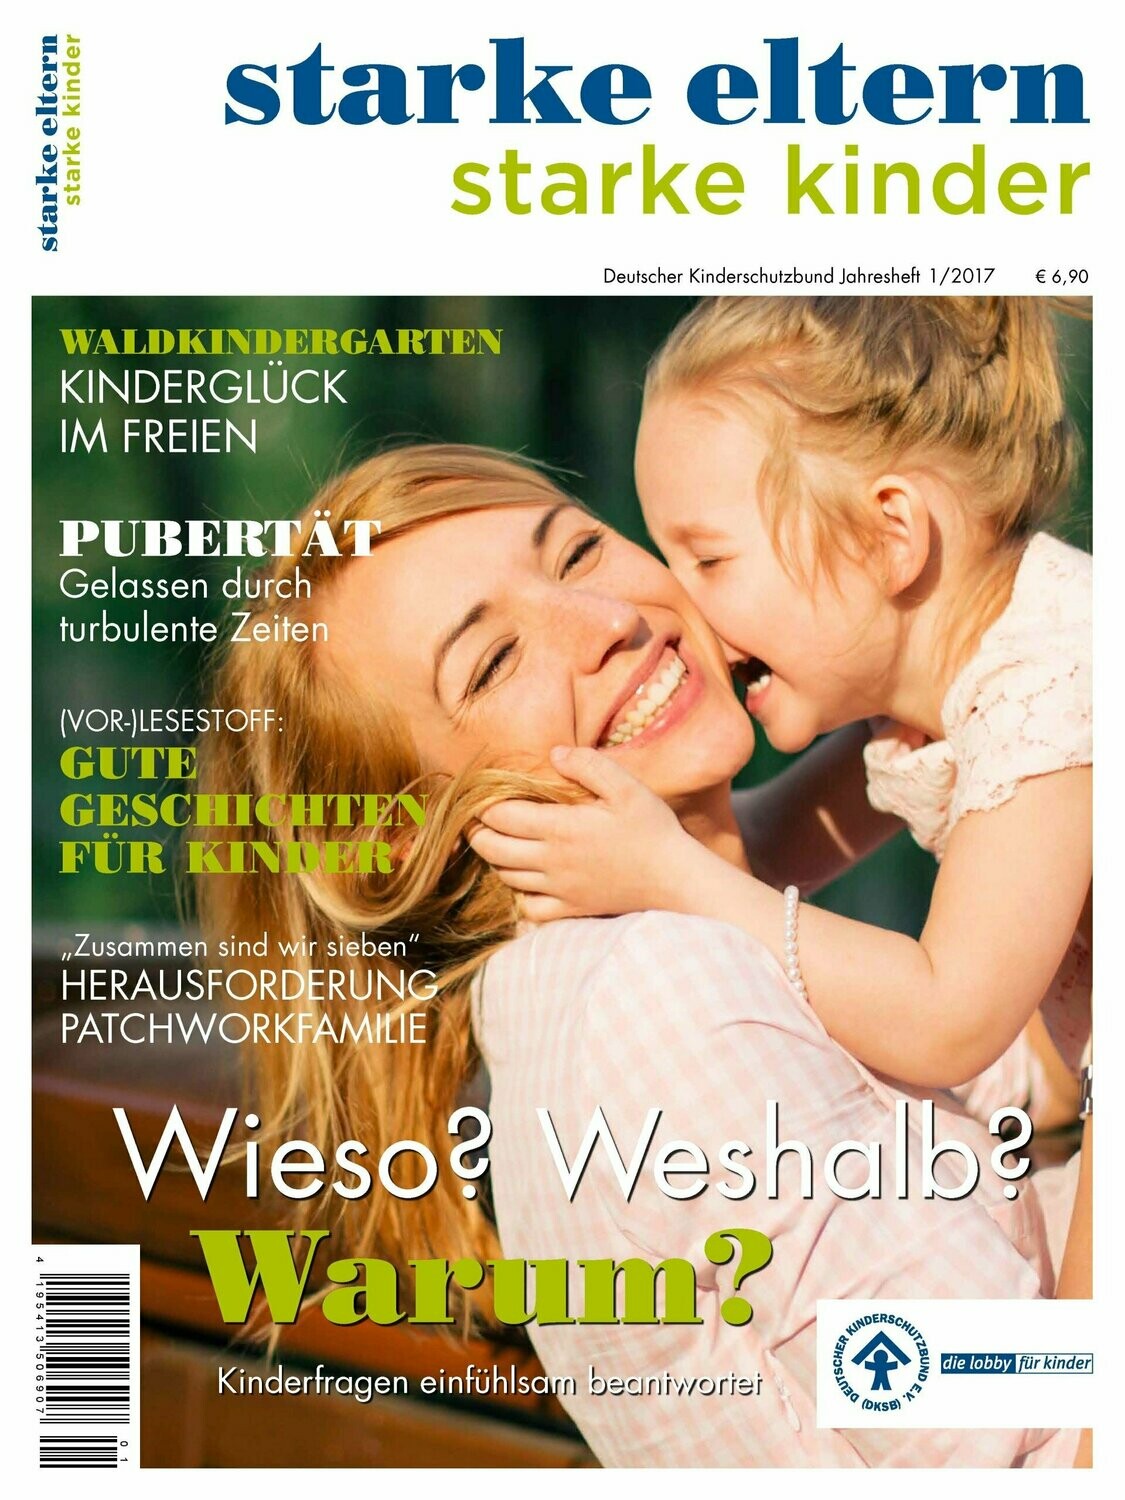 starke eltern - starke kinder 2017 (e-paper)